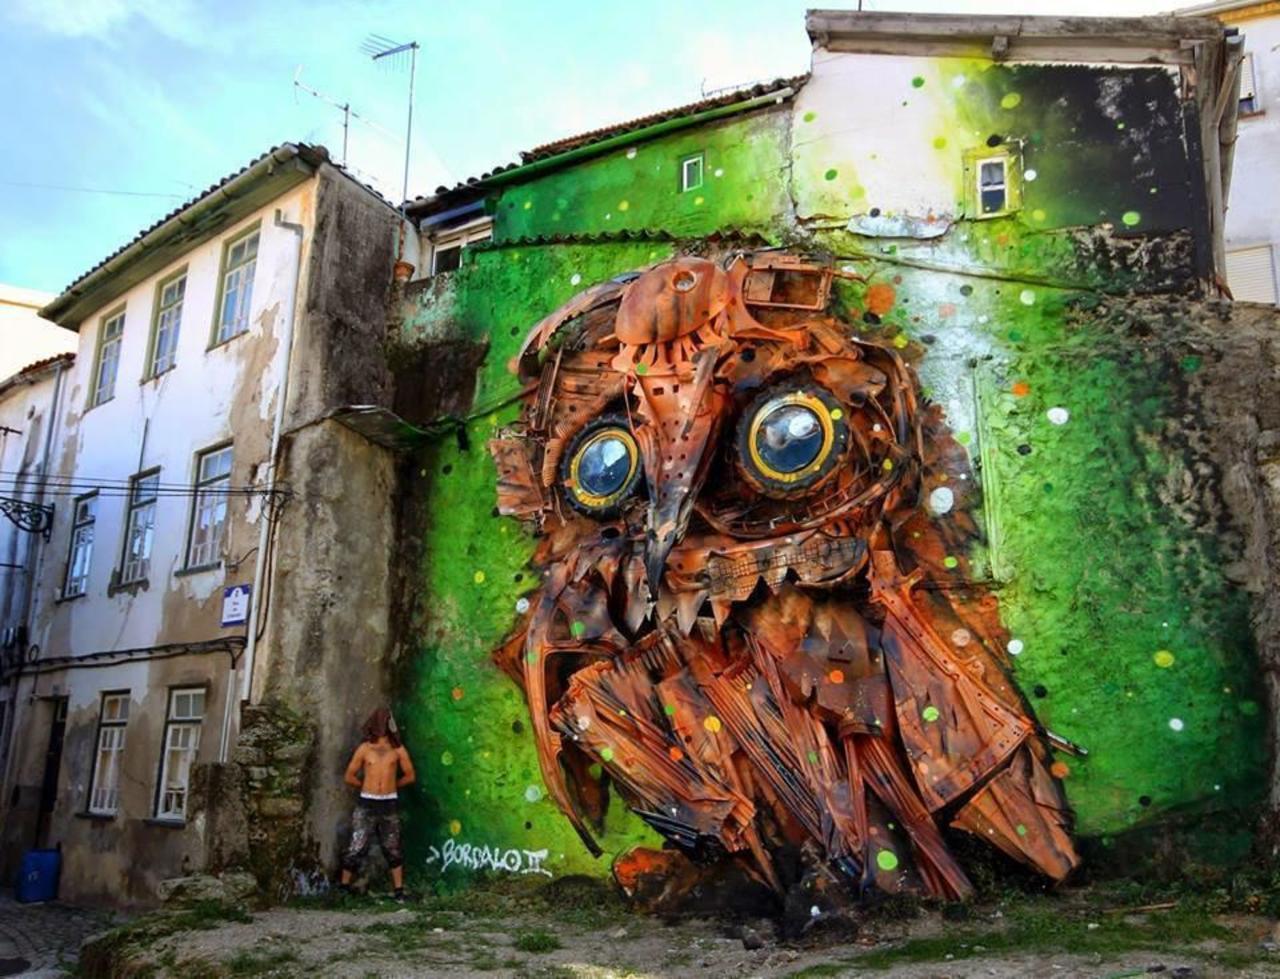 RT @samiaelsaid that cute #owl ❤️  #art work of bordaloII  #art  #streetart  #graffiti http://t.co/RLfmLQpFsd